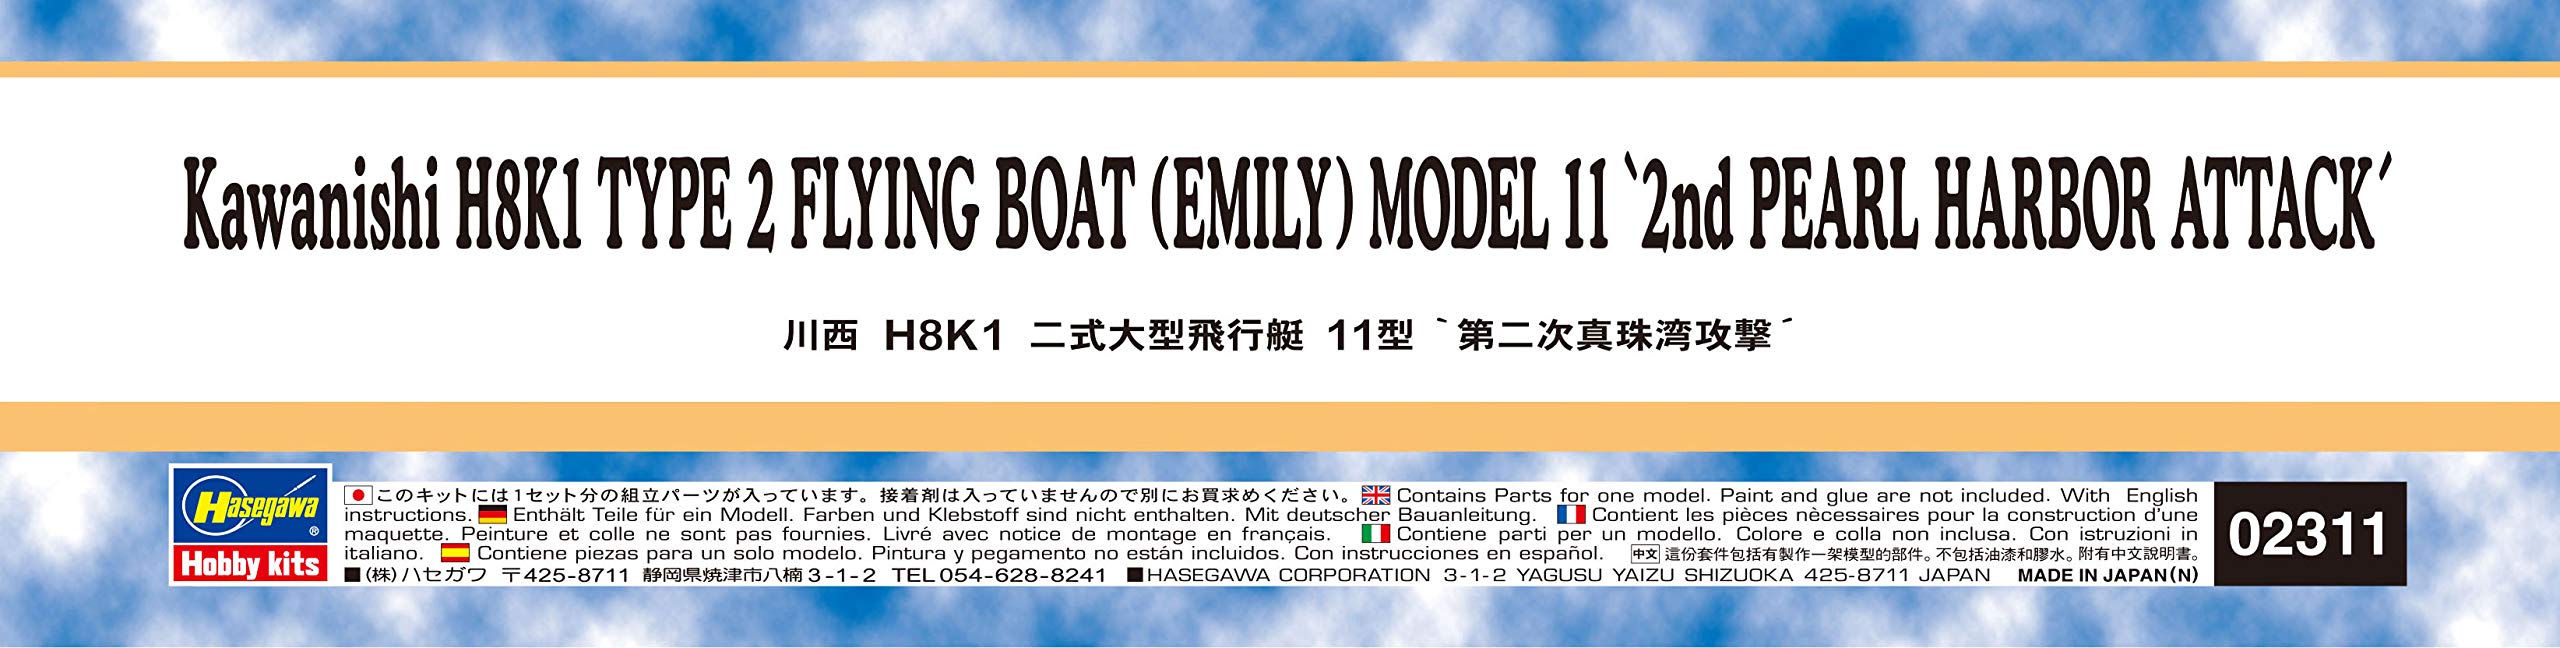 HASEGAWA 02311 Kawanishi H8K1 Typ 2 großes Flugboot Modell 11 Pearl Harbor 2nd Wave Attack Bausatz im Maßstab 1:72